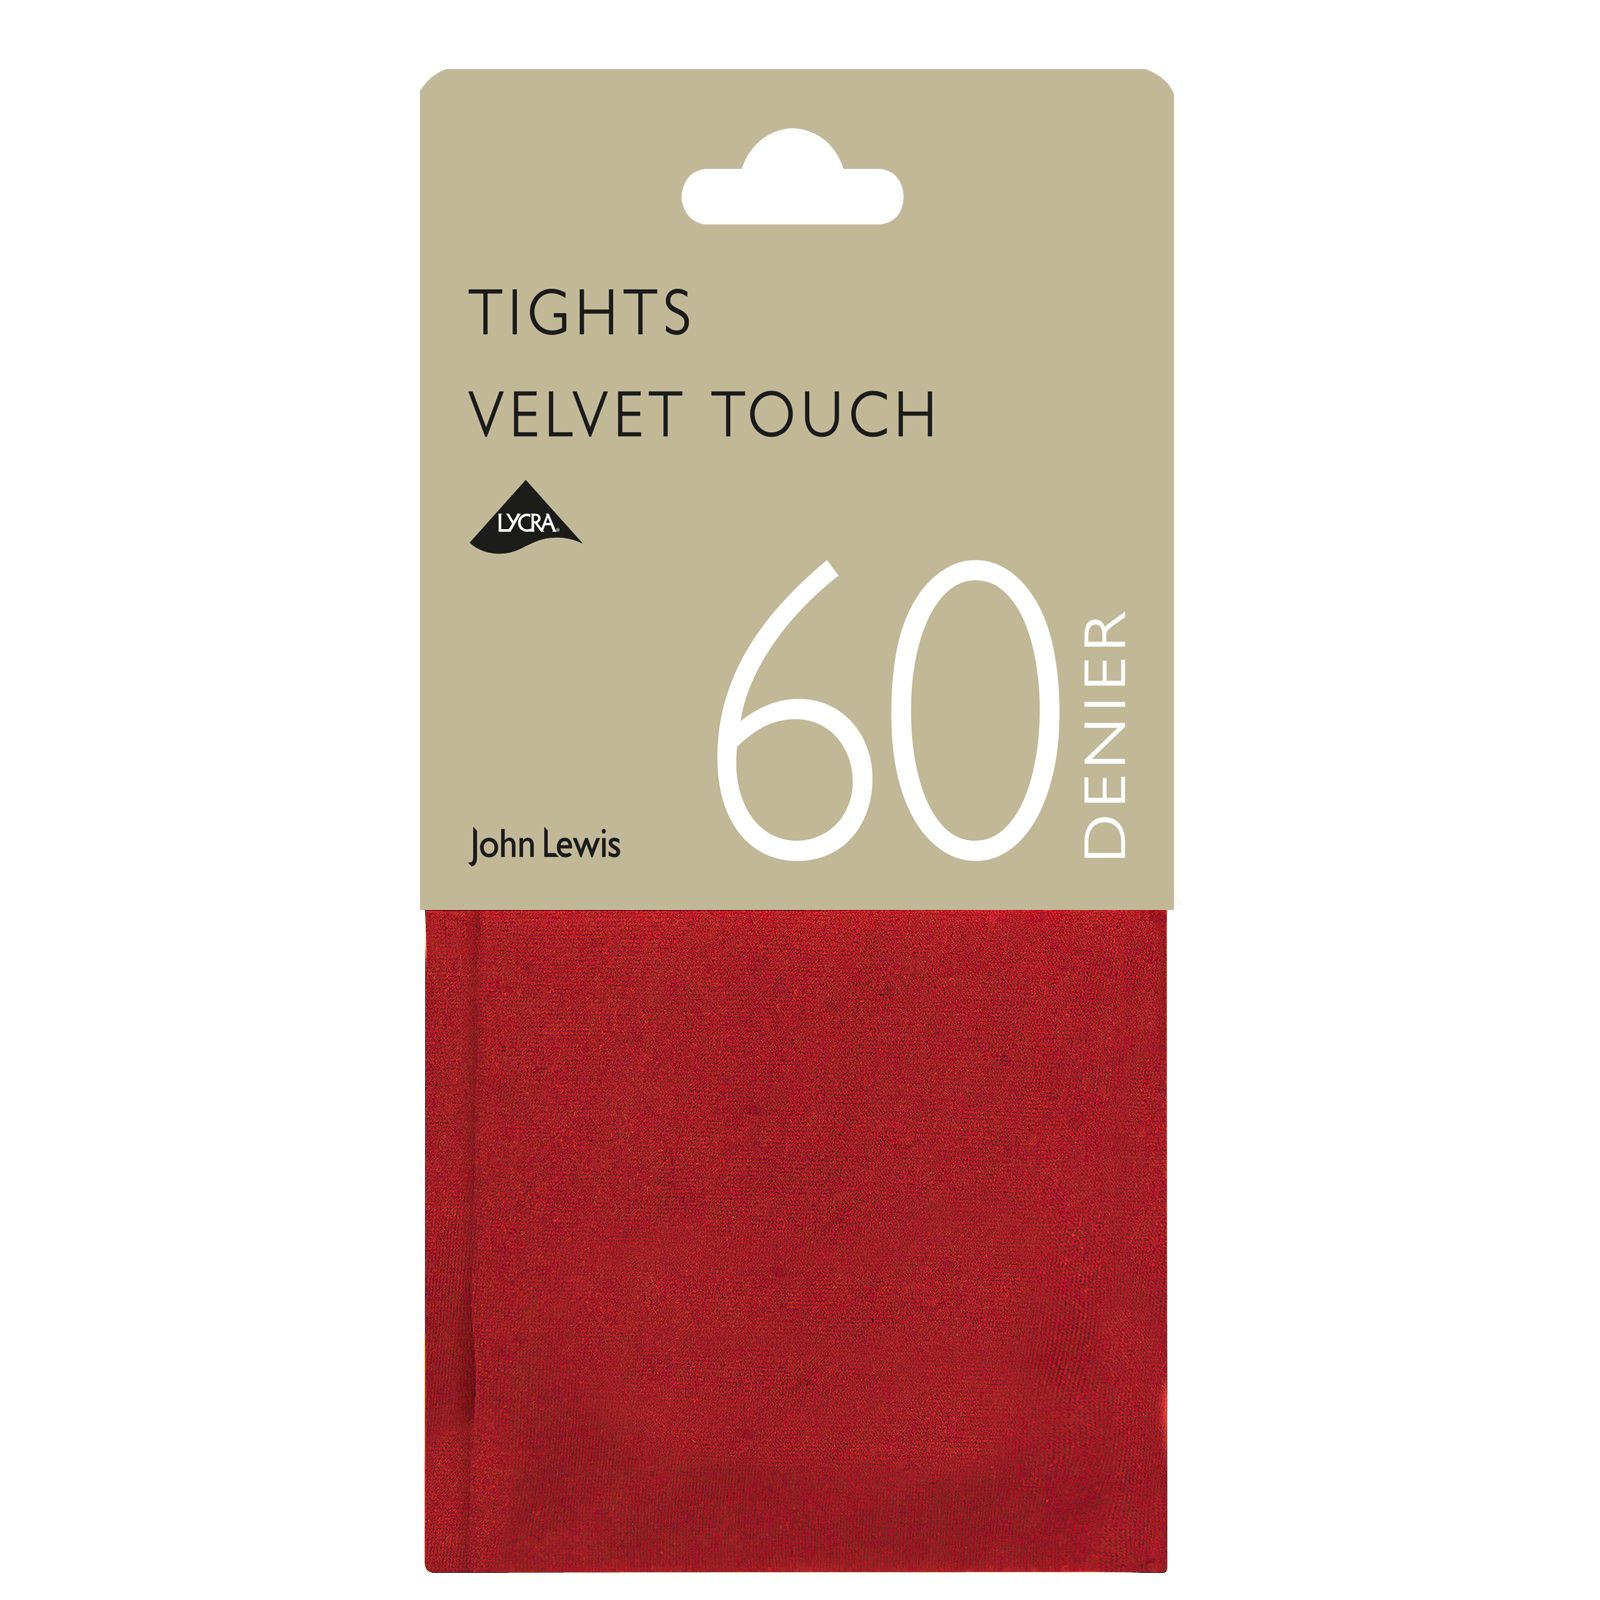 John Lewis 60 Denier Velvet Touch Opaque Tights, Red